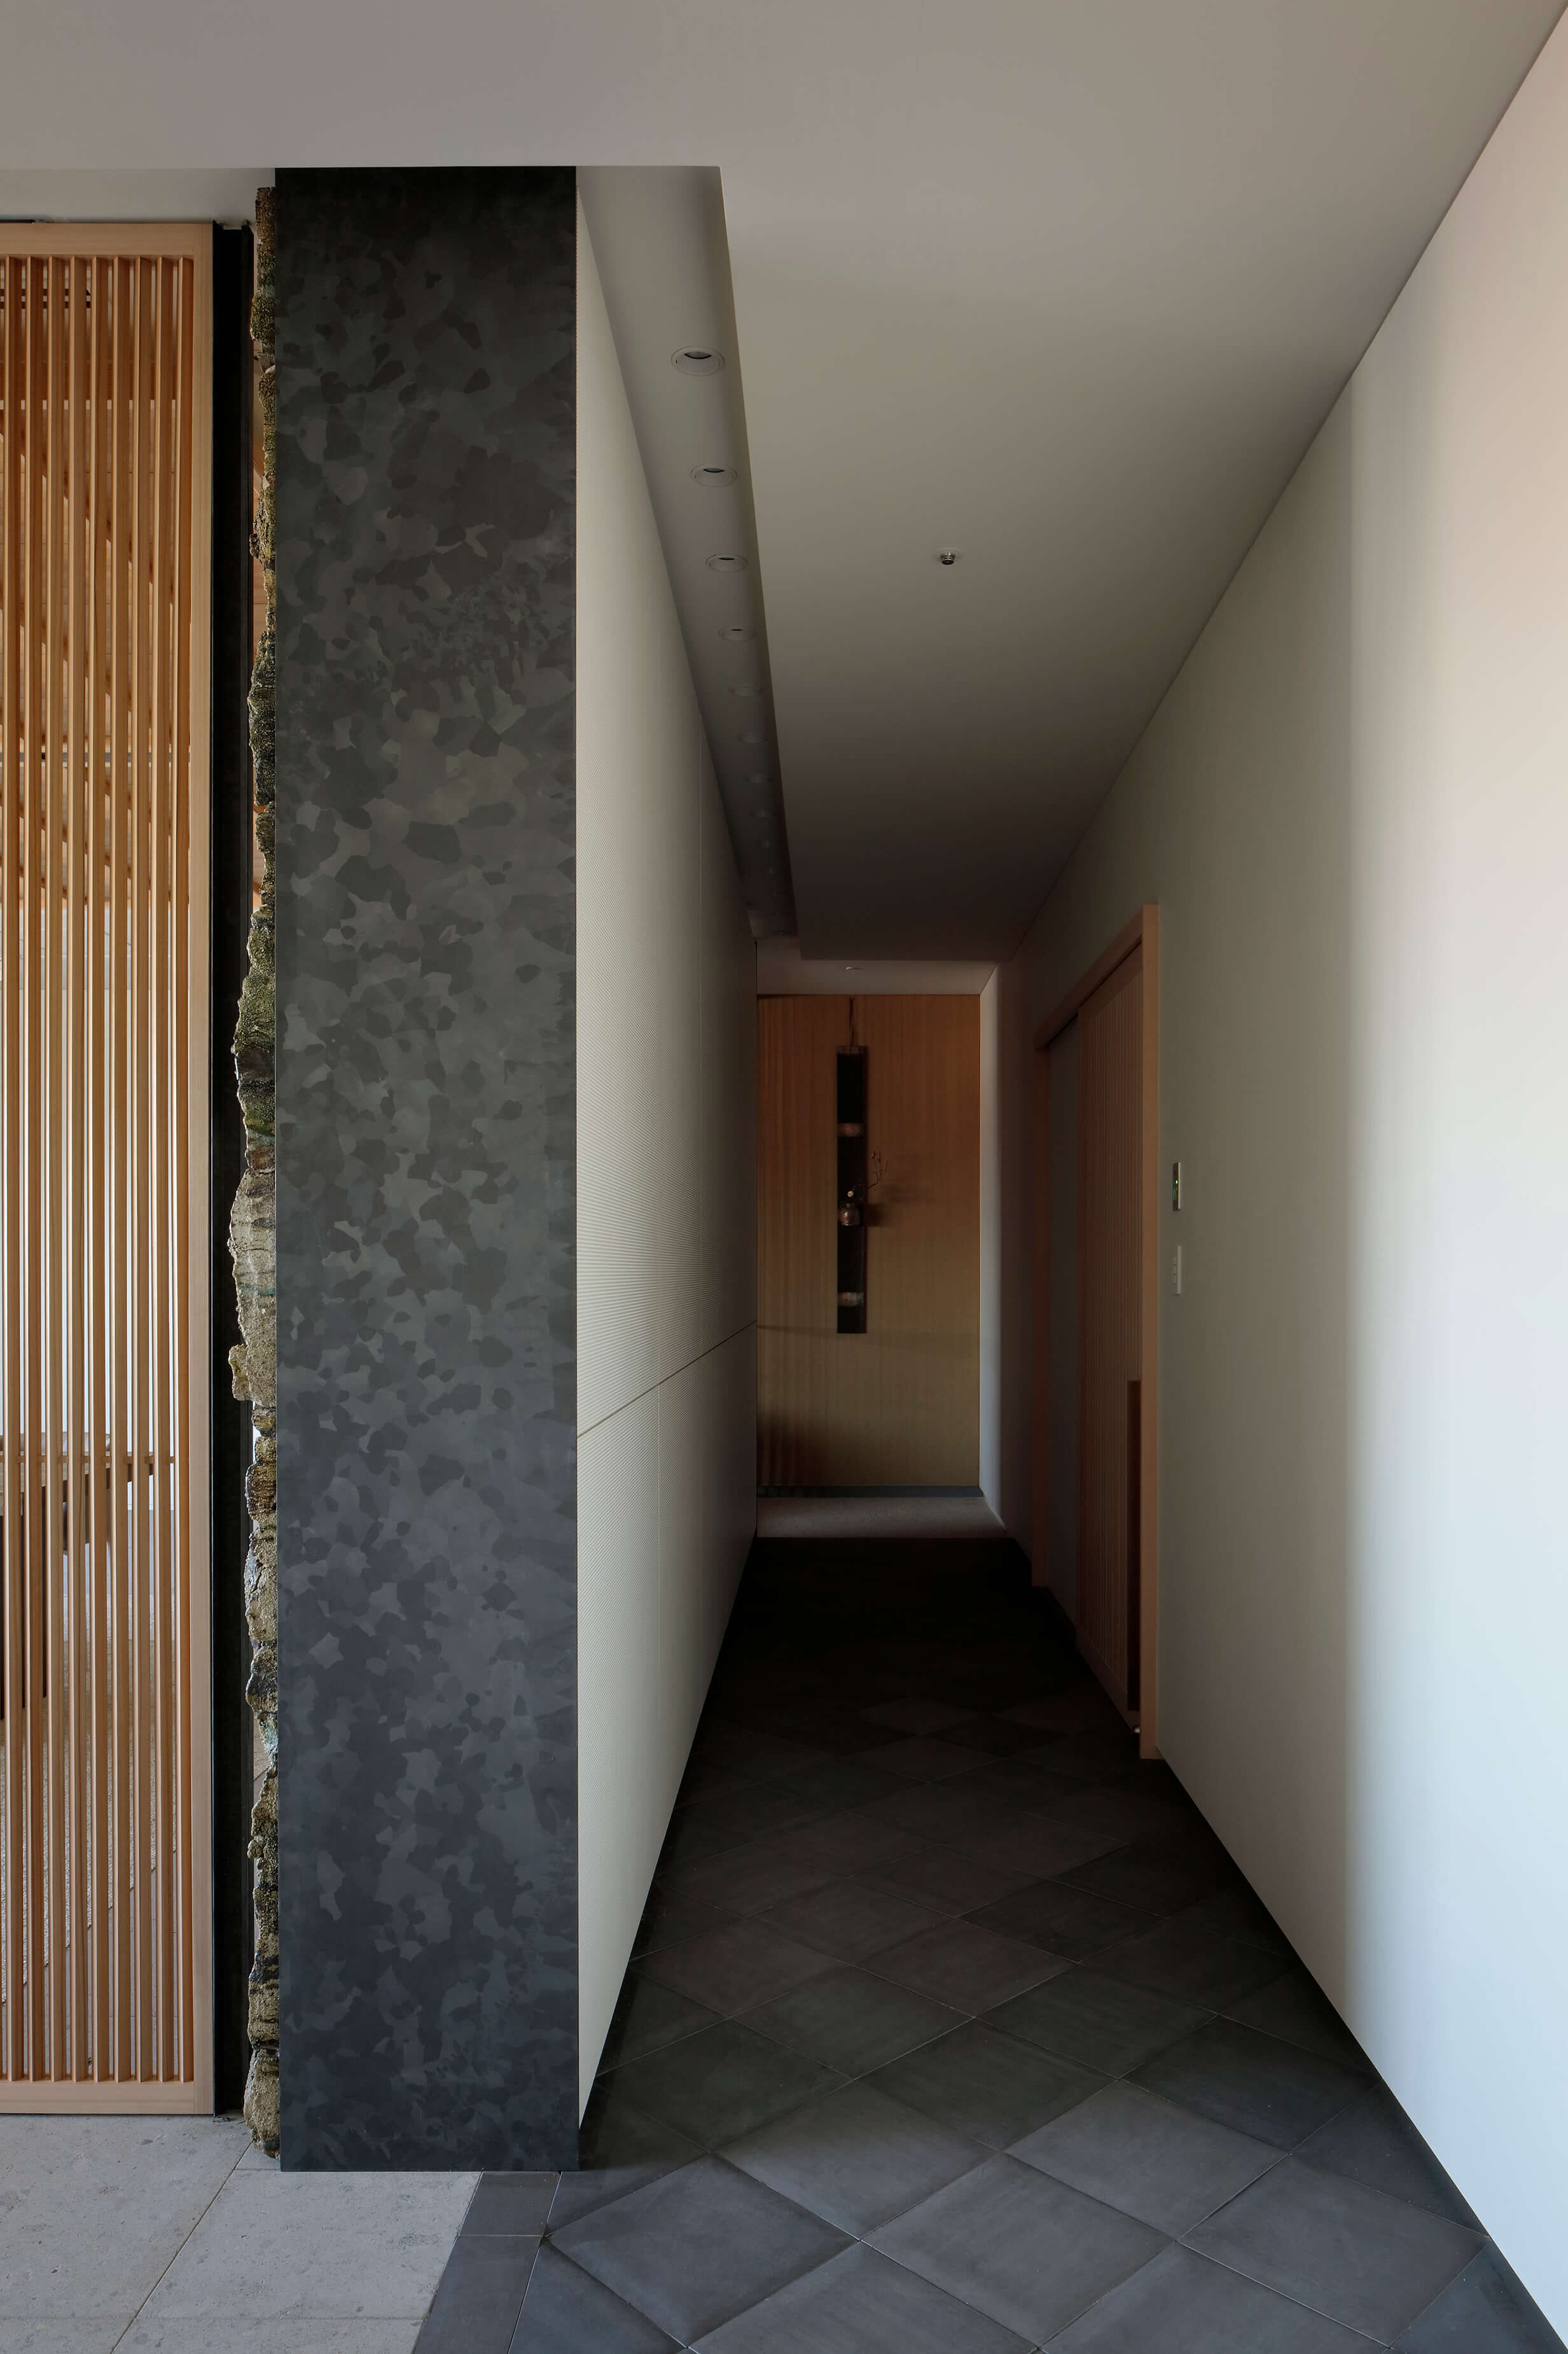 sakakida-tomoyuki-architect-ntv-office-interior-design-tokyo-japan-idreit-005m.jpg